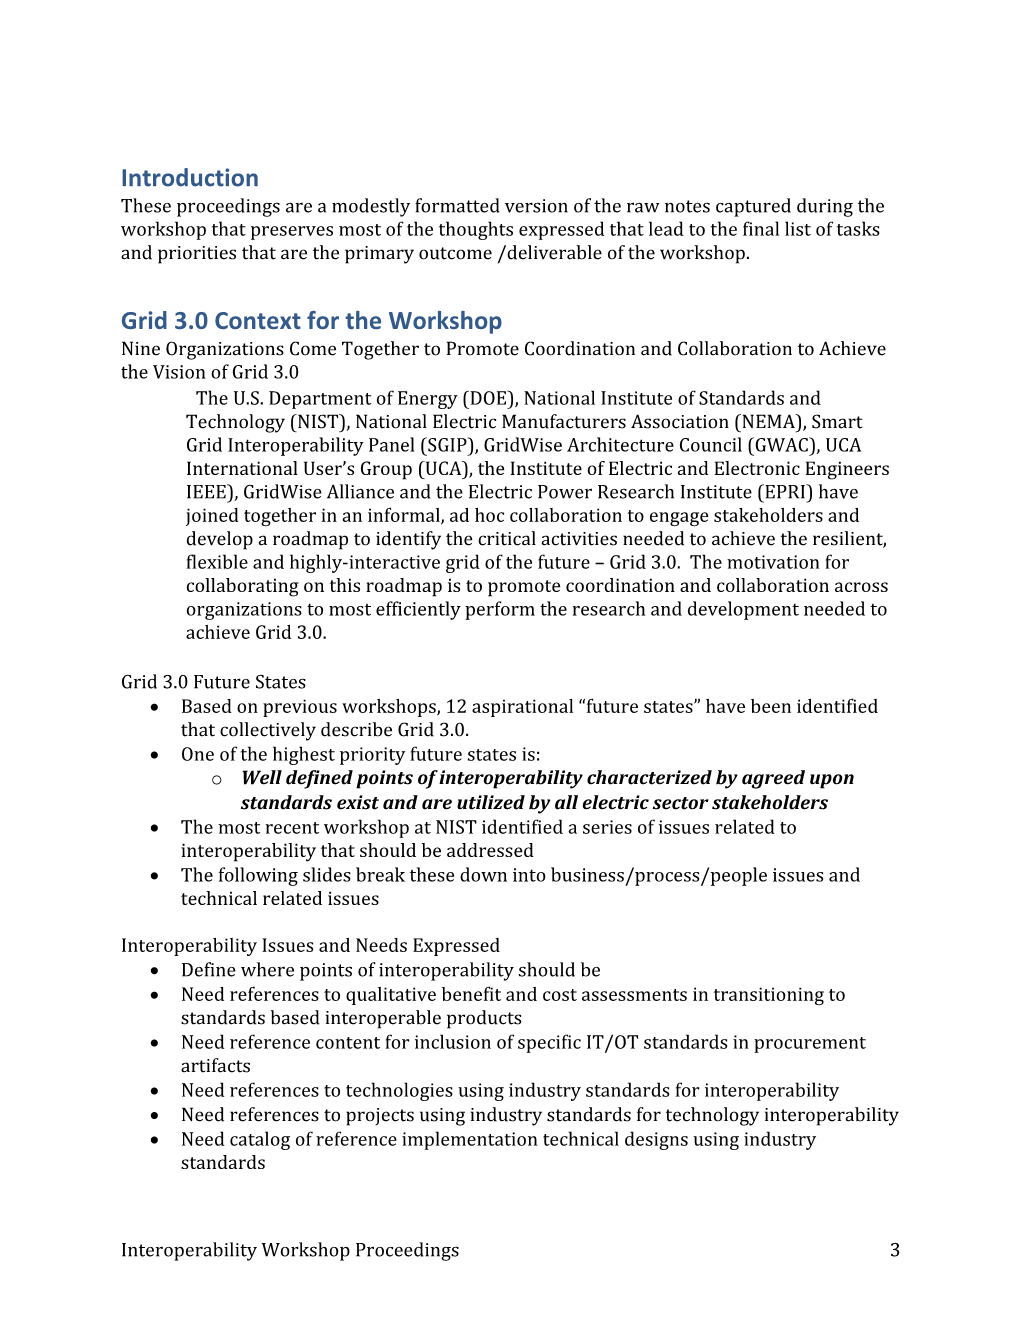 Proceedings of the Grid 3.0 Interoperability Workshop